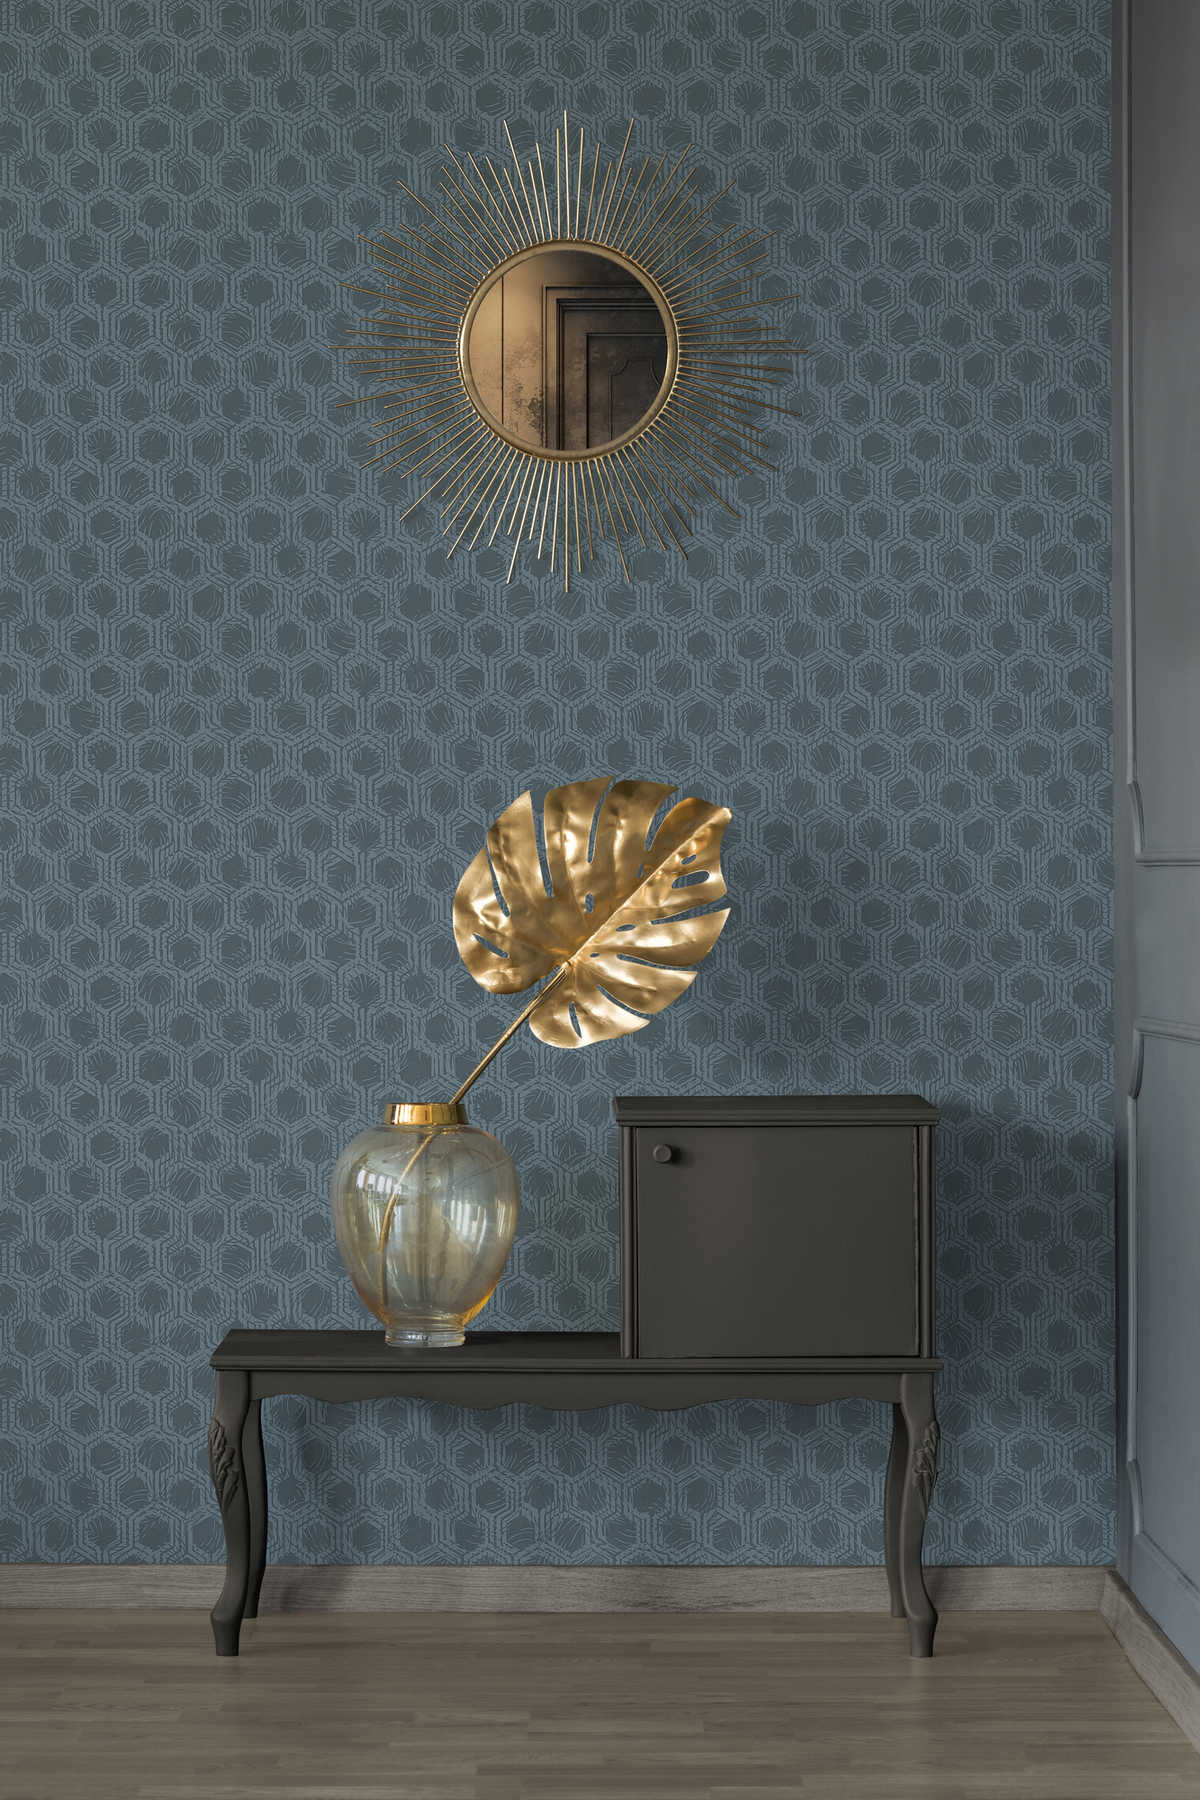             Pattern wallpaper with hexagon pattern in ethnic style - blue, metallic
        